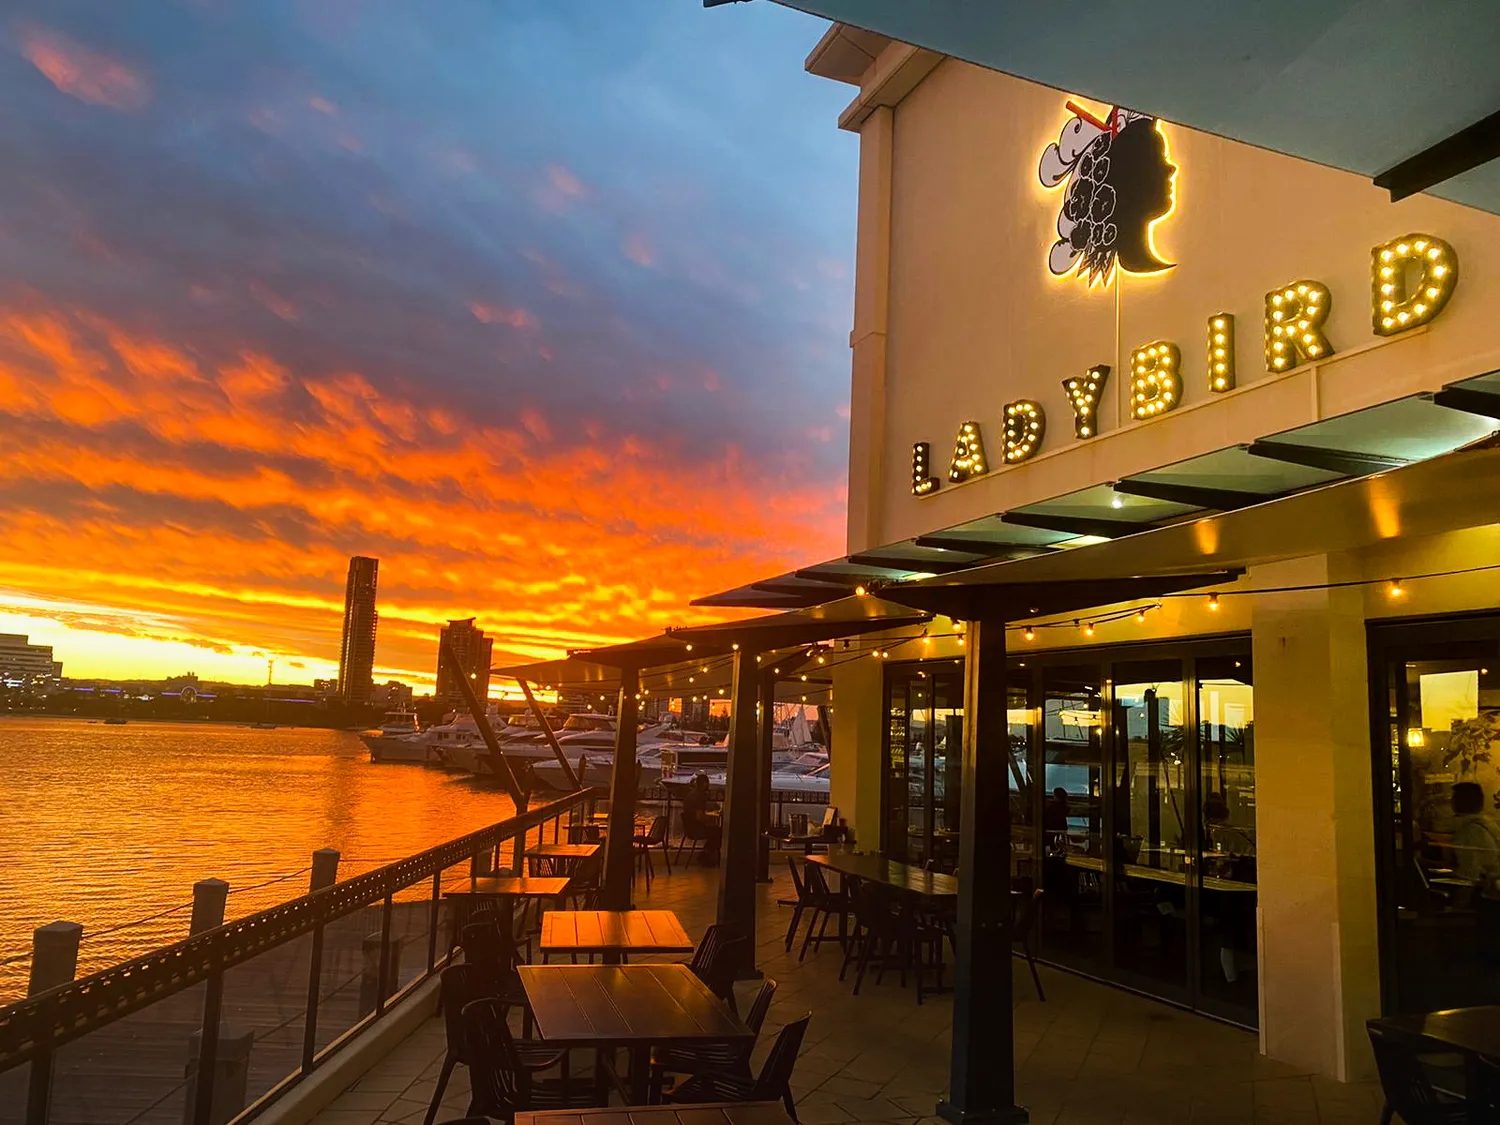 Ladybird restaurant Gold Coast